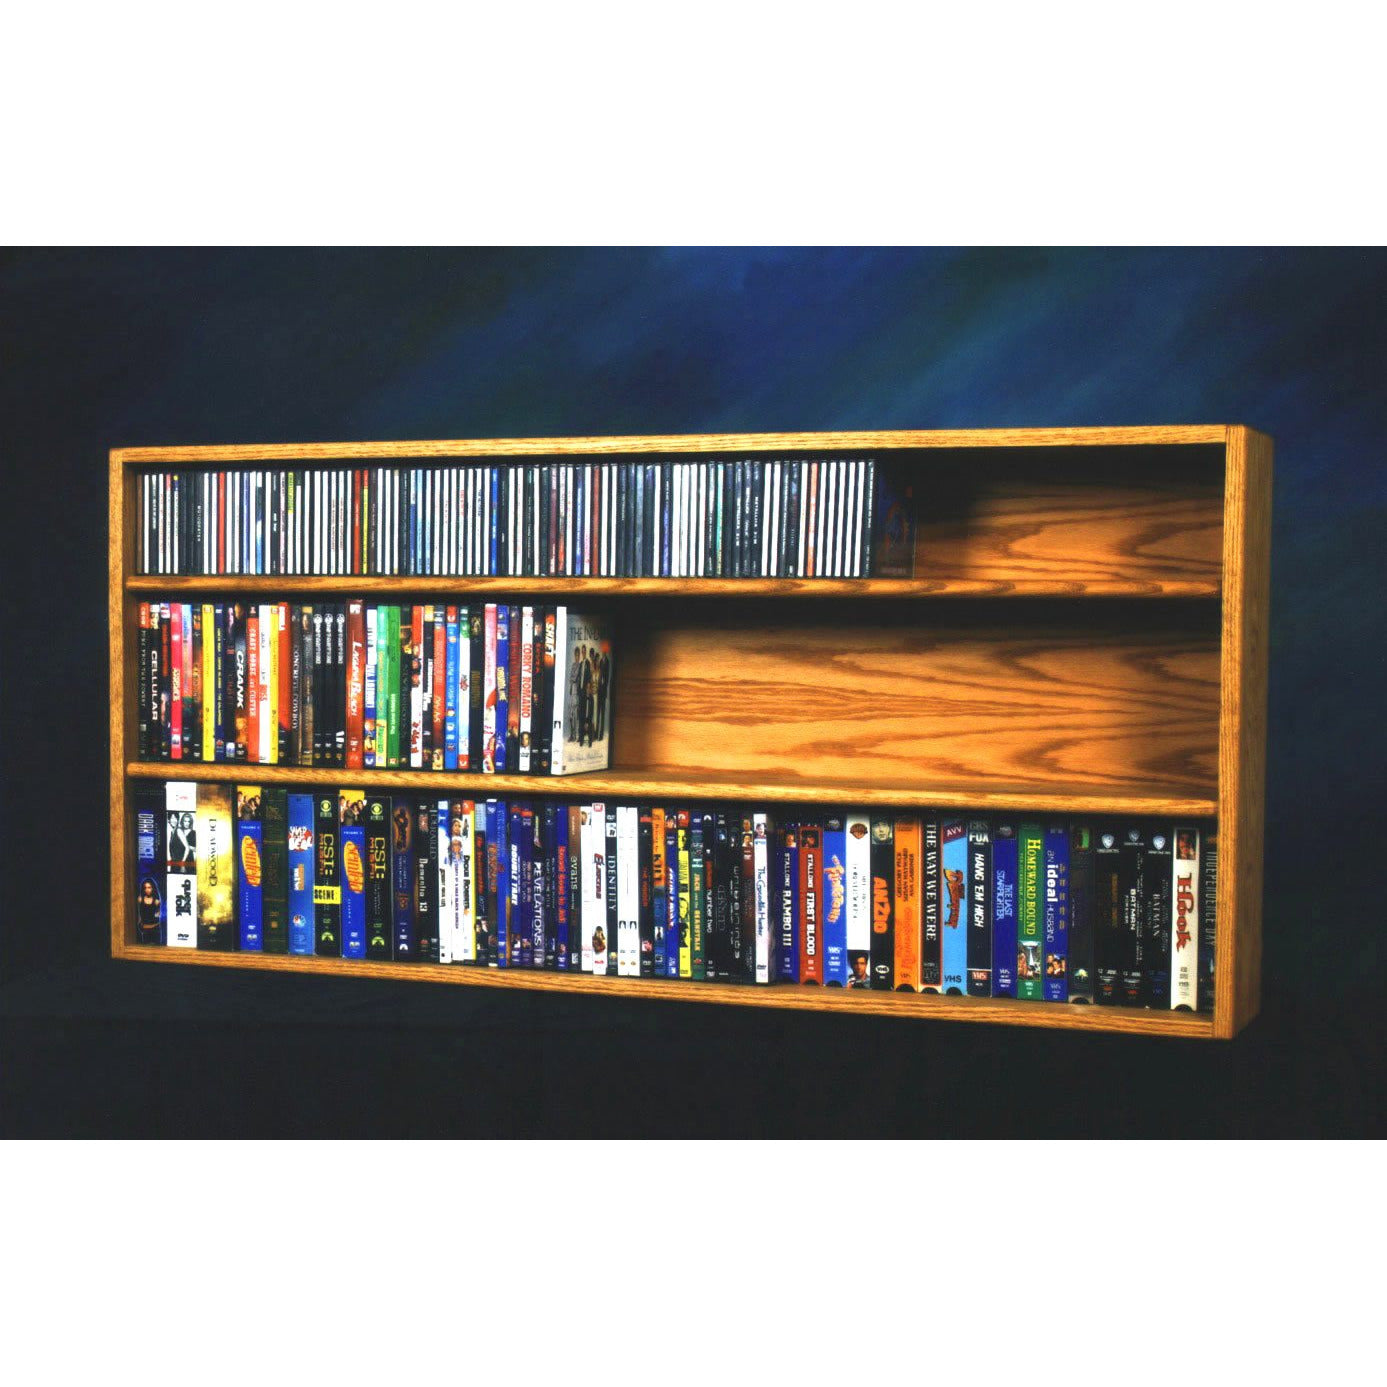 13 Series CD/Blu-ray Combination Cabinets, 3 columns/shelves